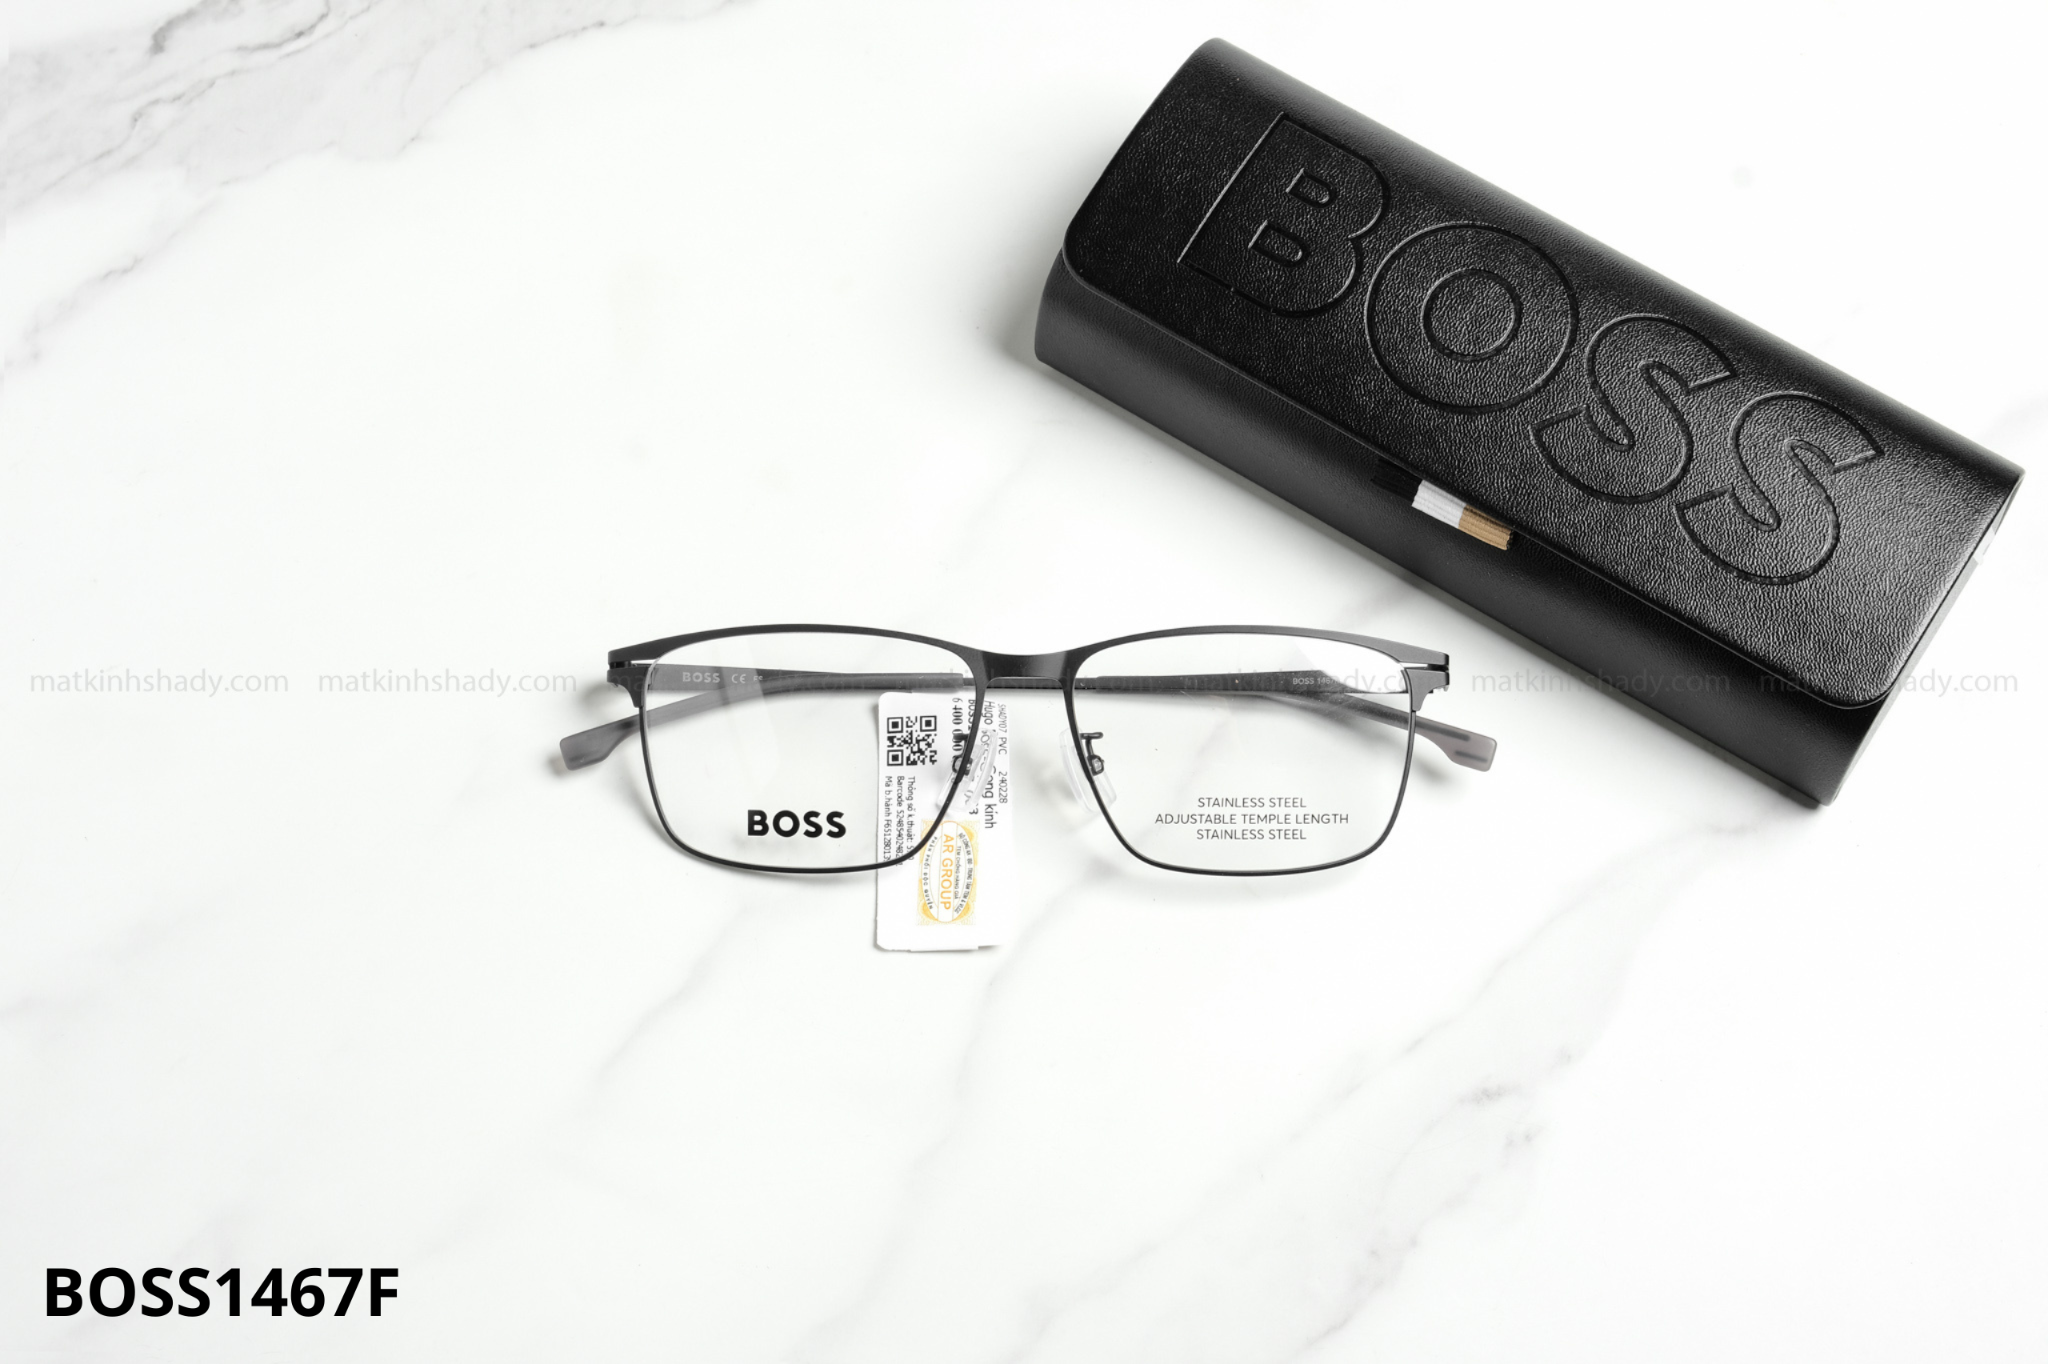  Boss Eyewear - Glasses - Boss1467F 